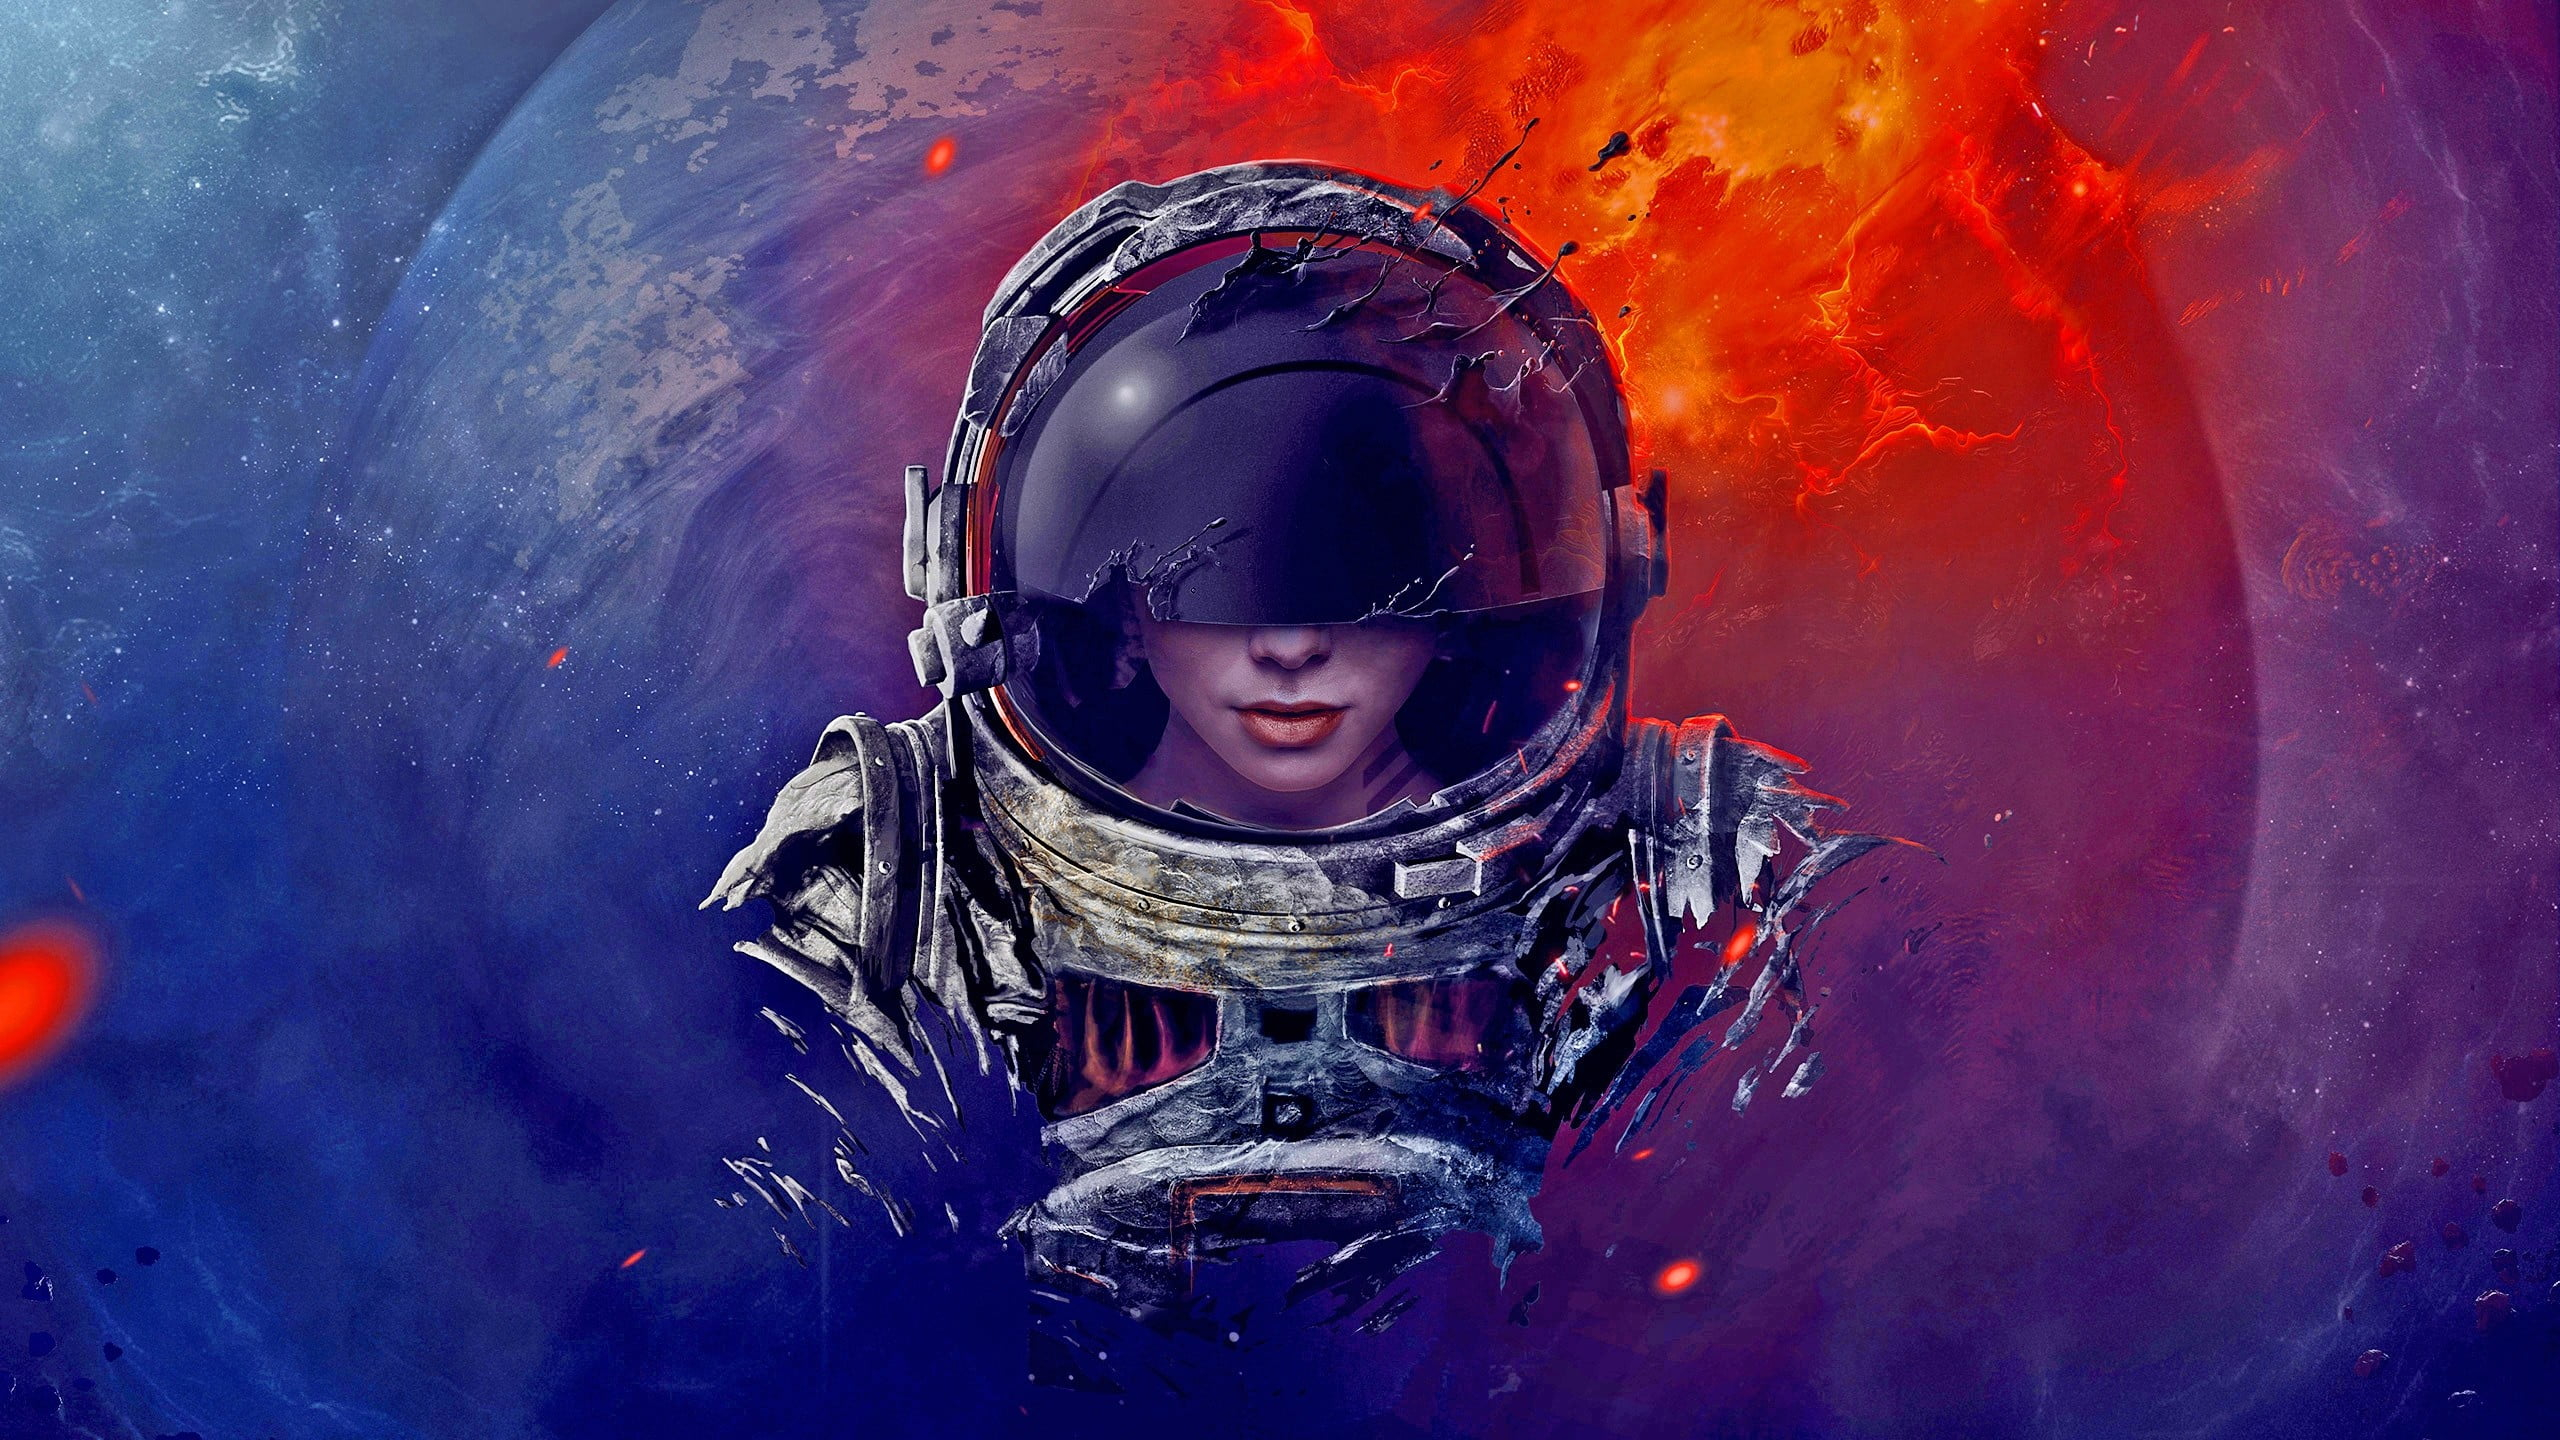 Astronaut wallpaper, digital art, spacesuit, helmet, universe